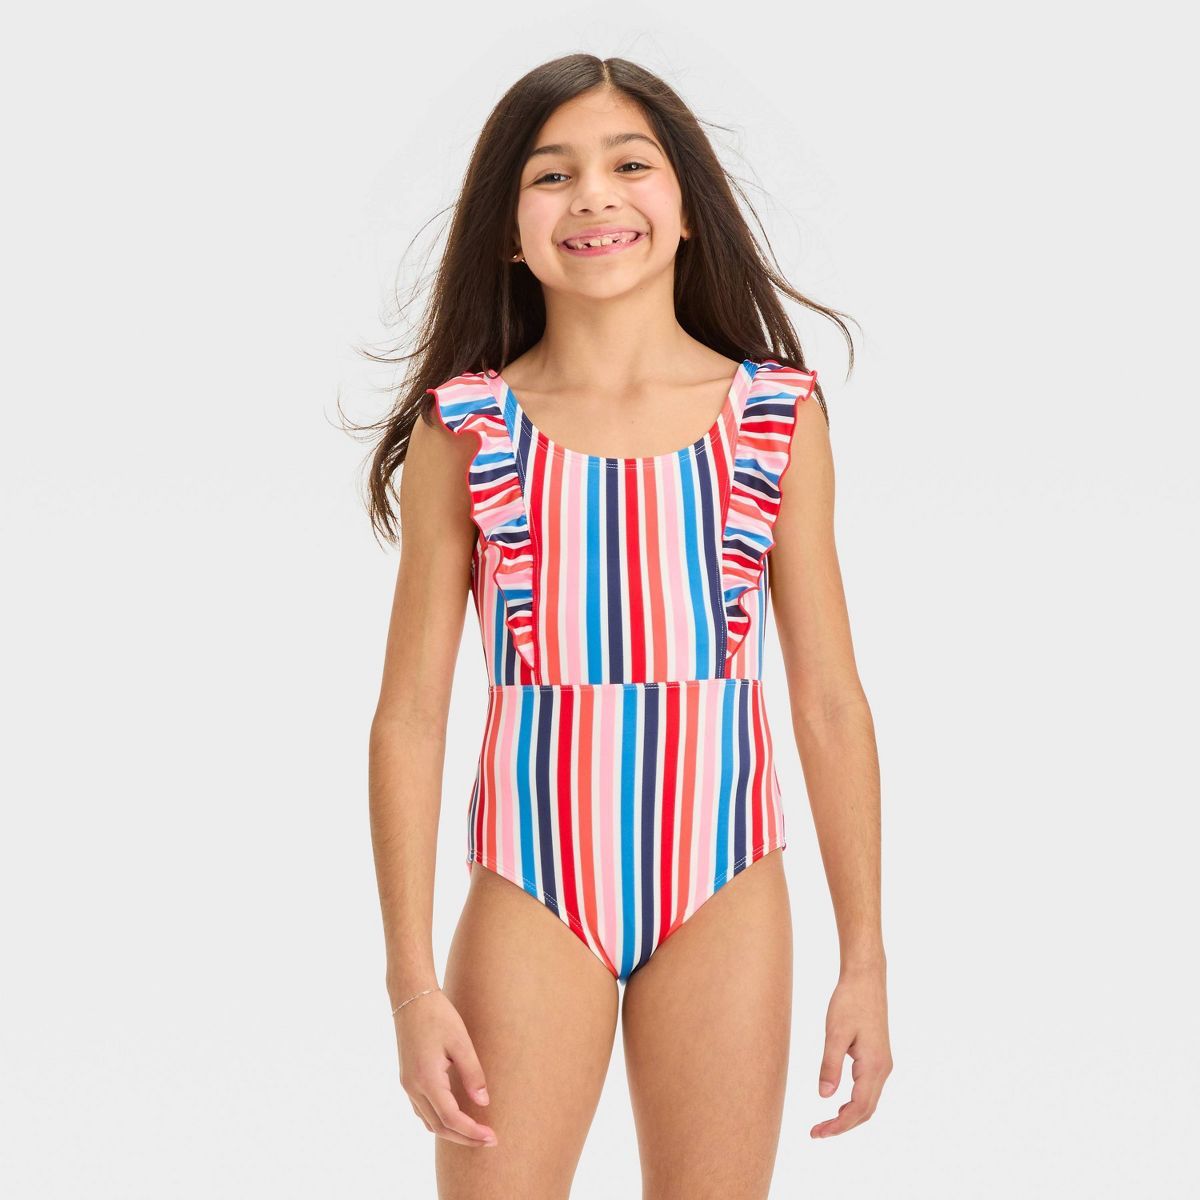 Girls' Sunshine Bound Striped One Piece Swimsuit - Cat & Jack™ XL Plus | Target